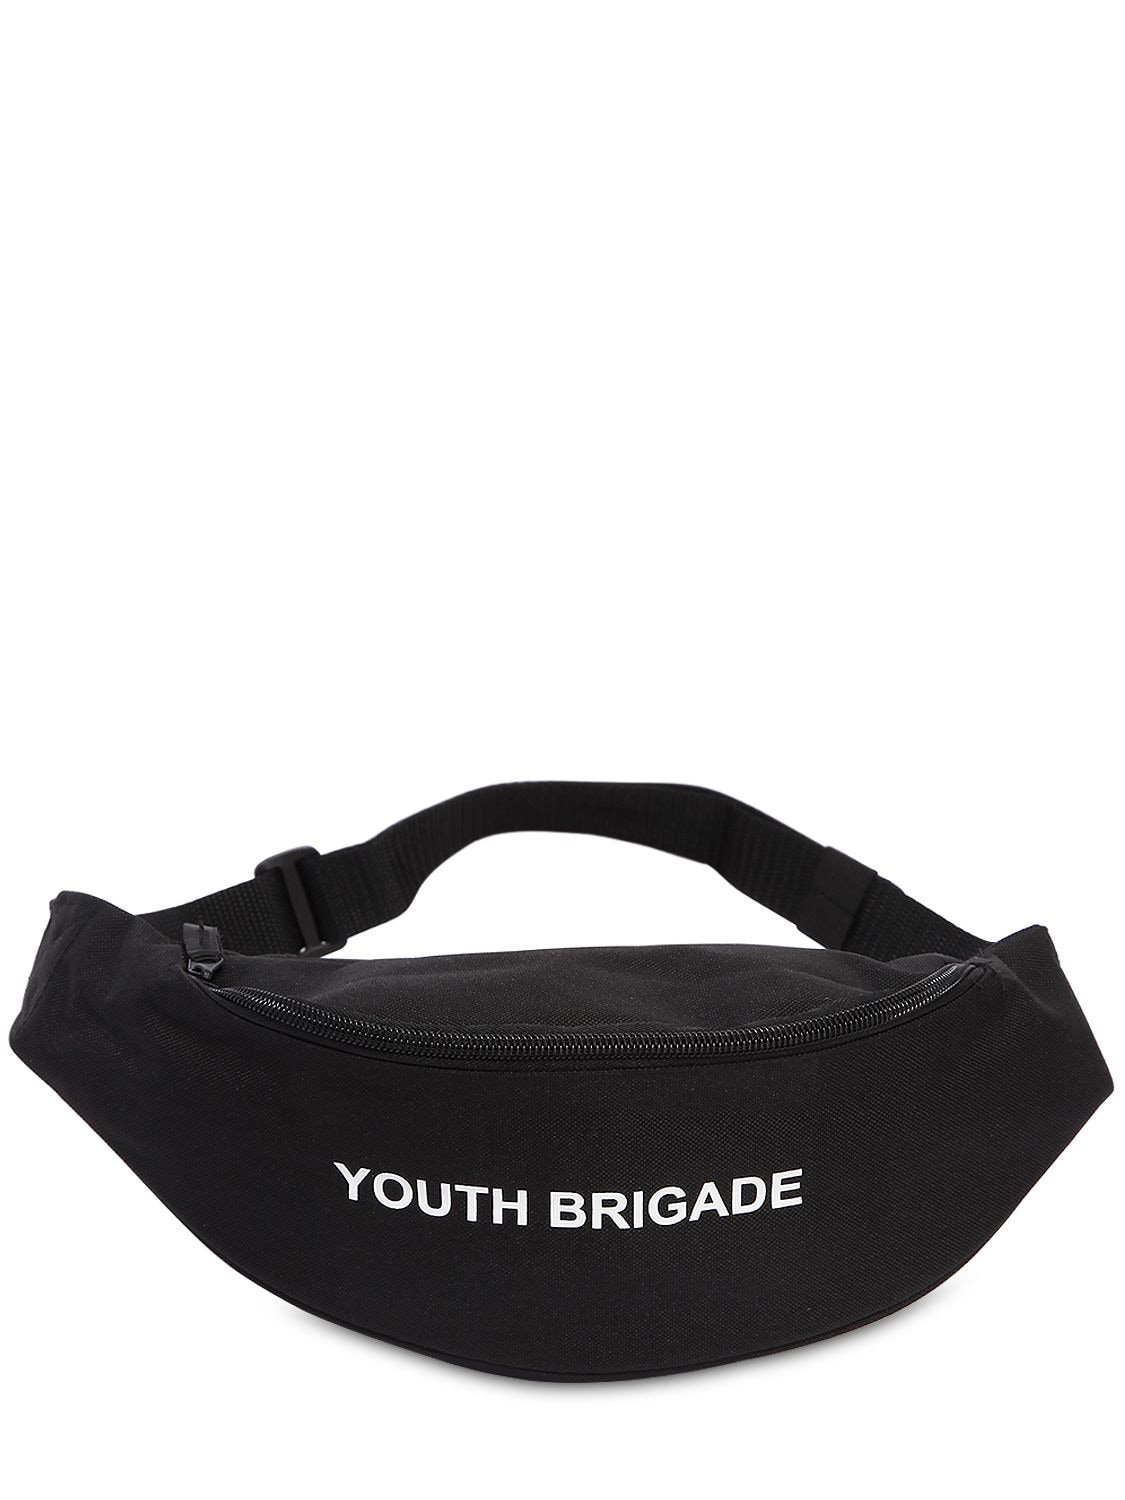 Andrea Crews Youth Brigade Nylon Belt Pack In Black